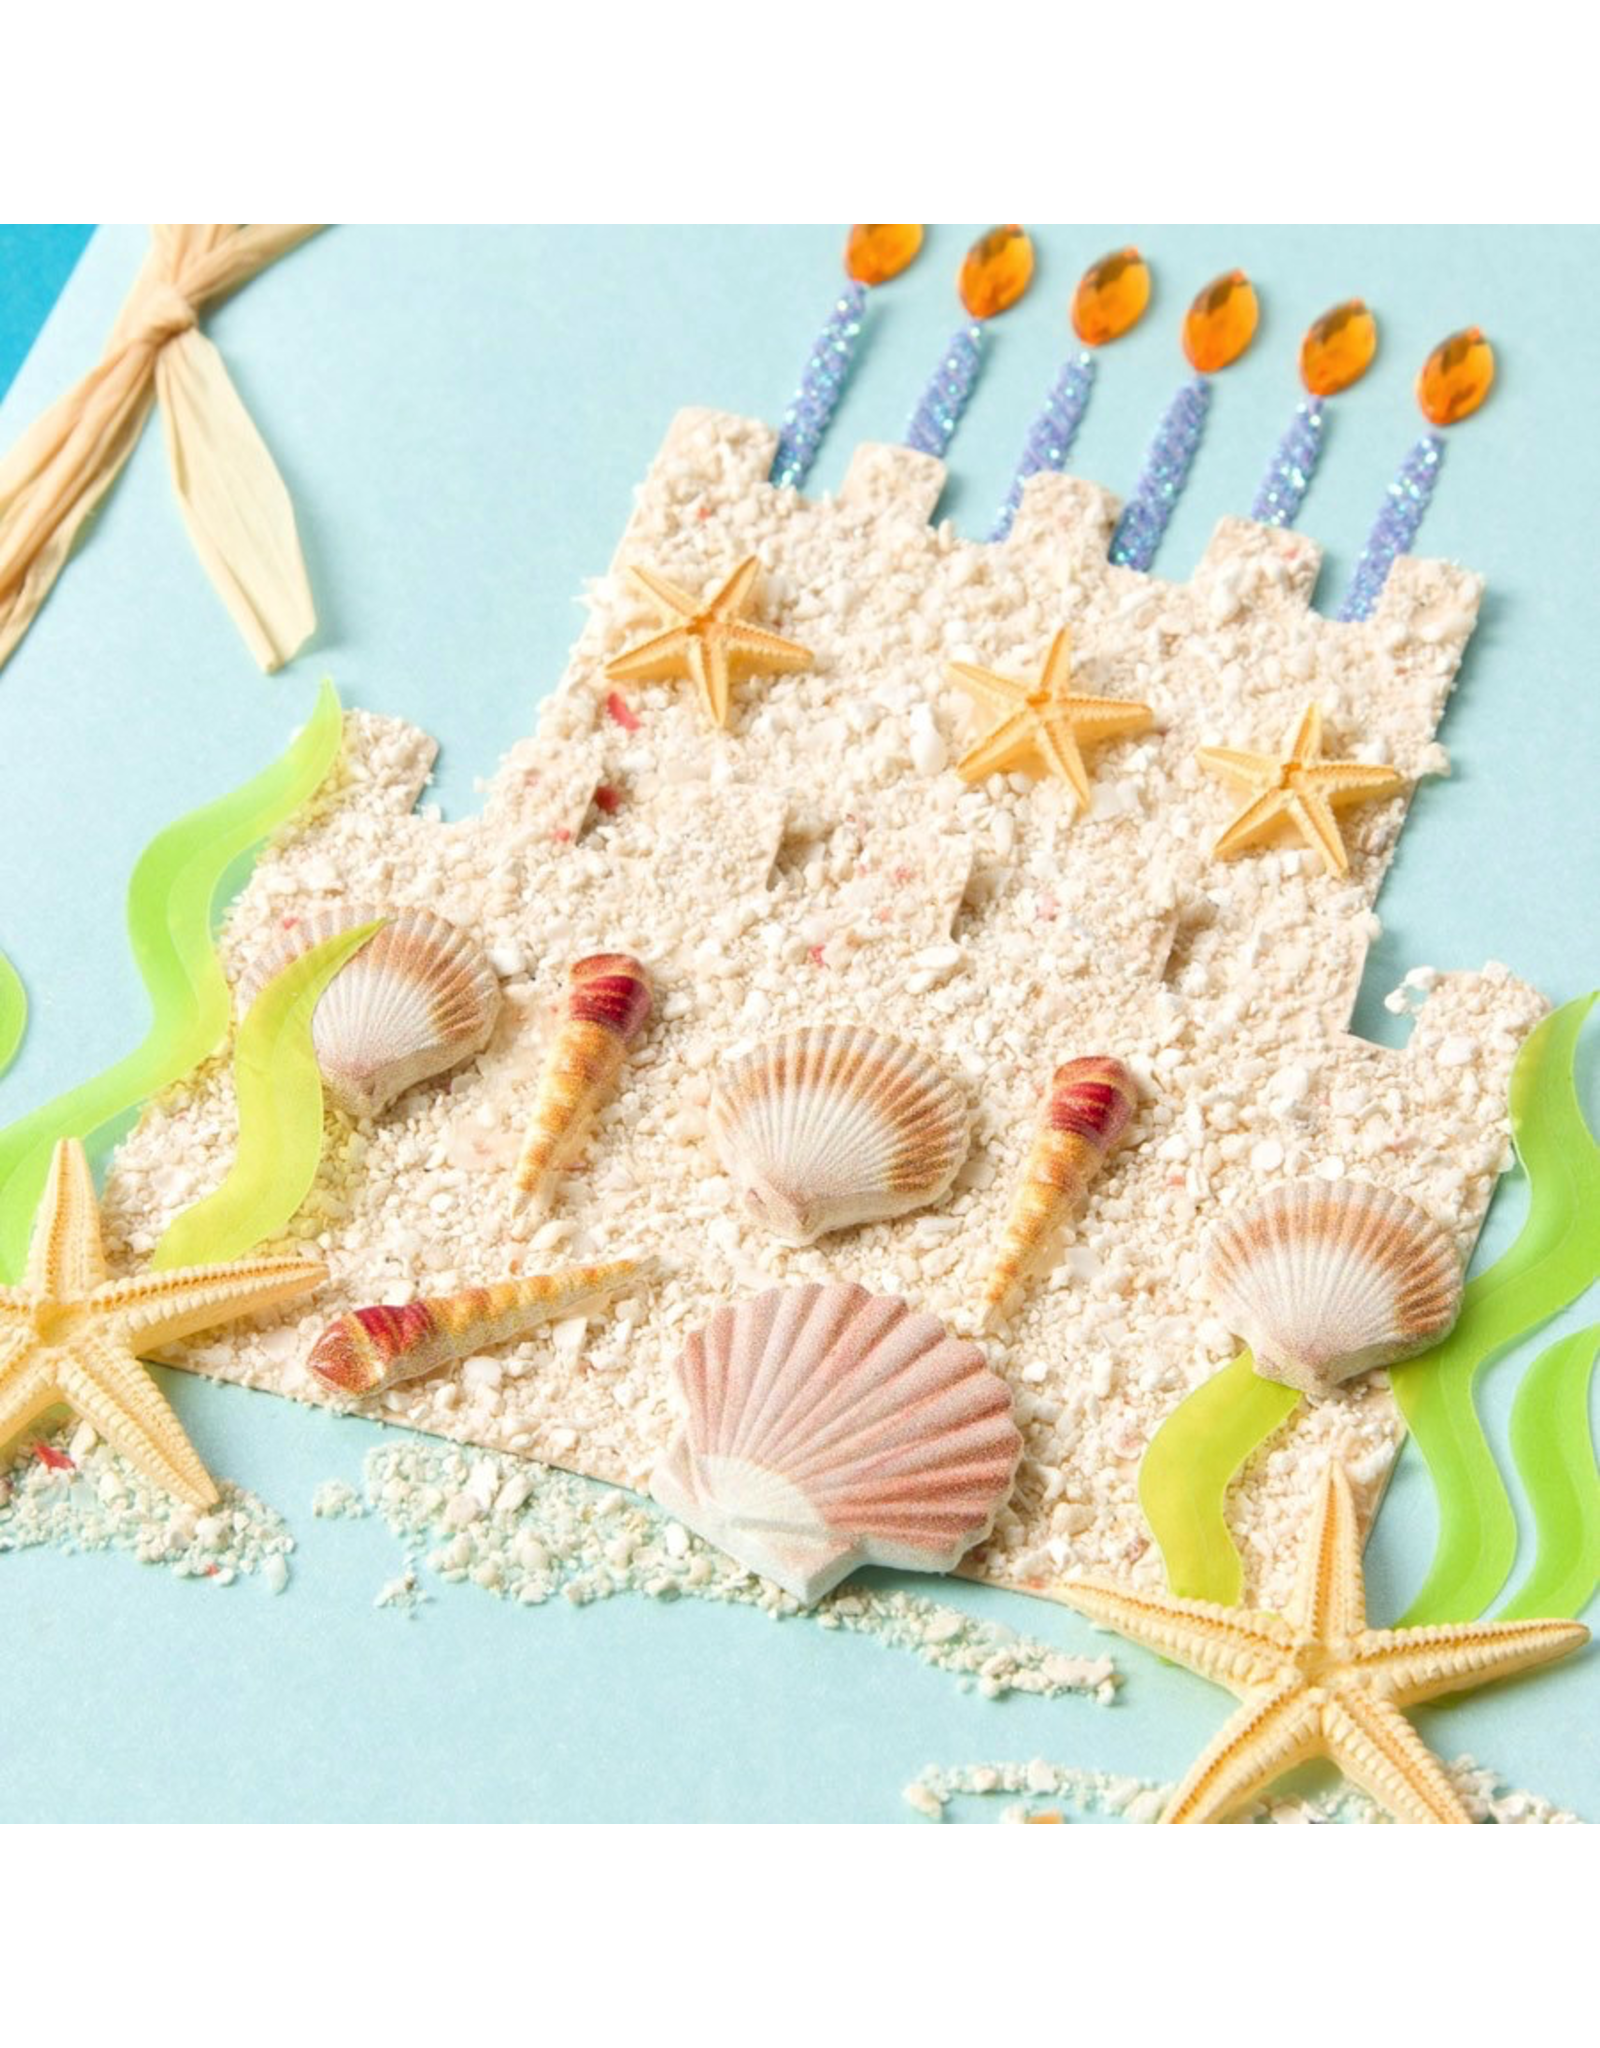 PAPYRUS® Birthday Card Sandcastle Cake Wonderful Like You